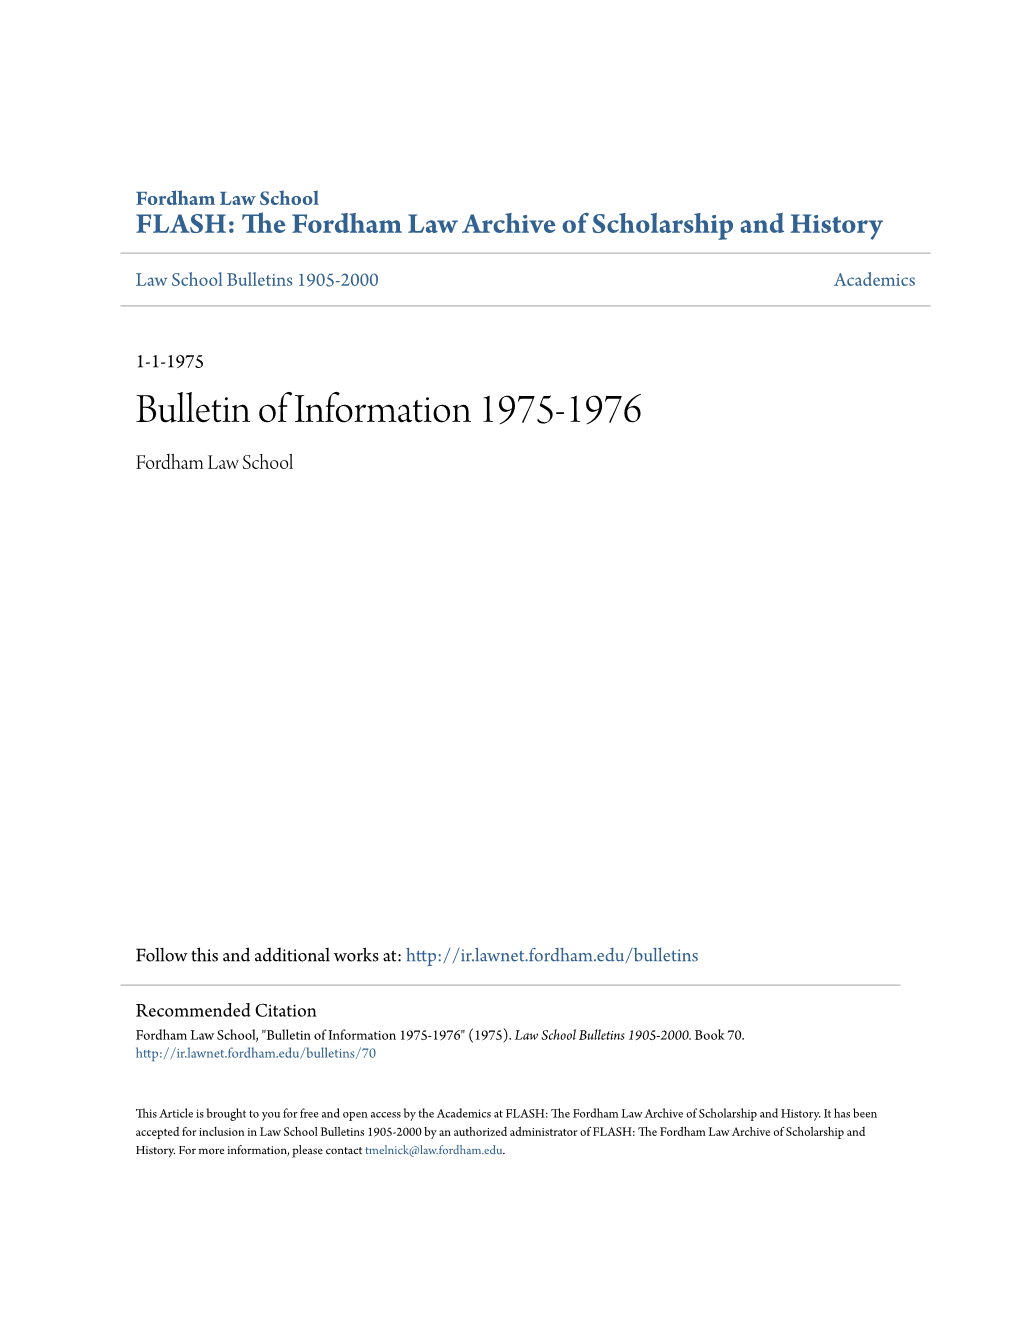 Bulletin of Information 1975-1976 Fordham Law School